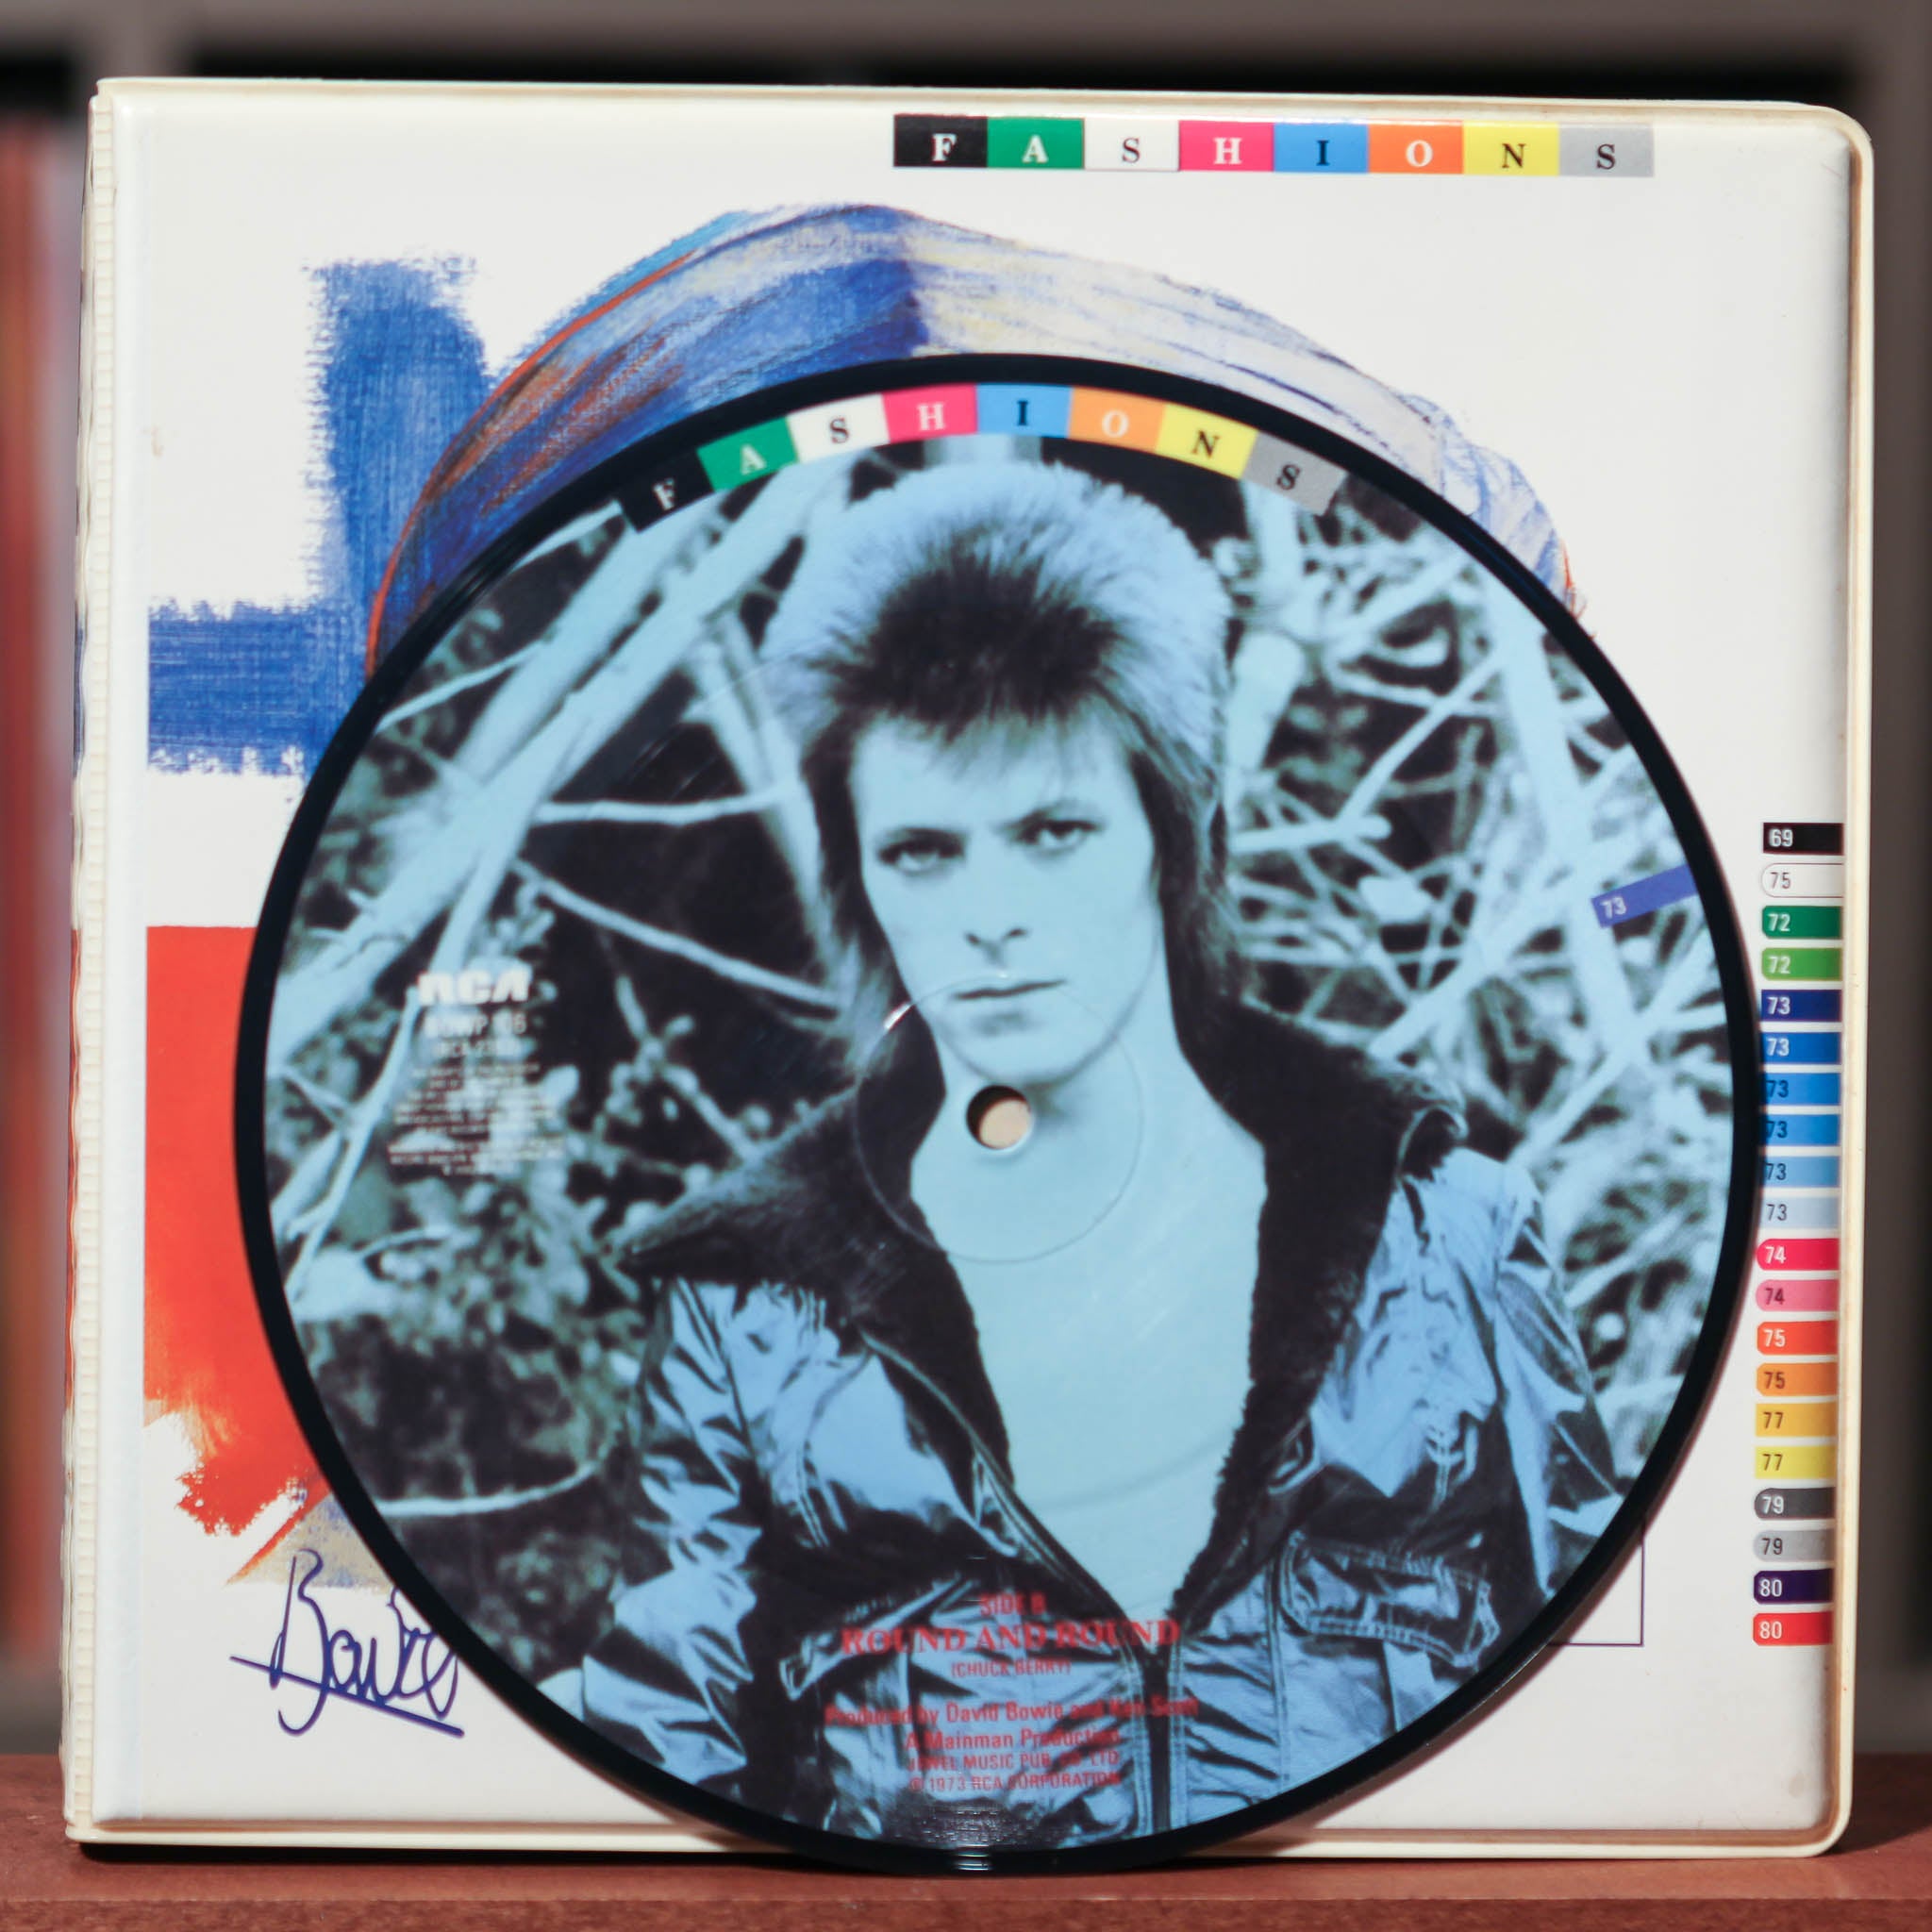 David Bowie - Fashions - 7